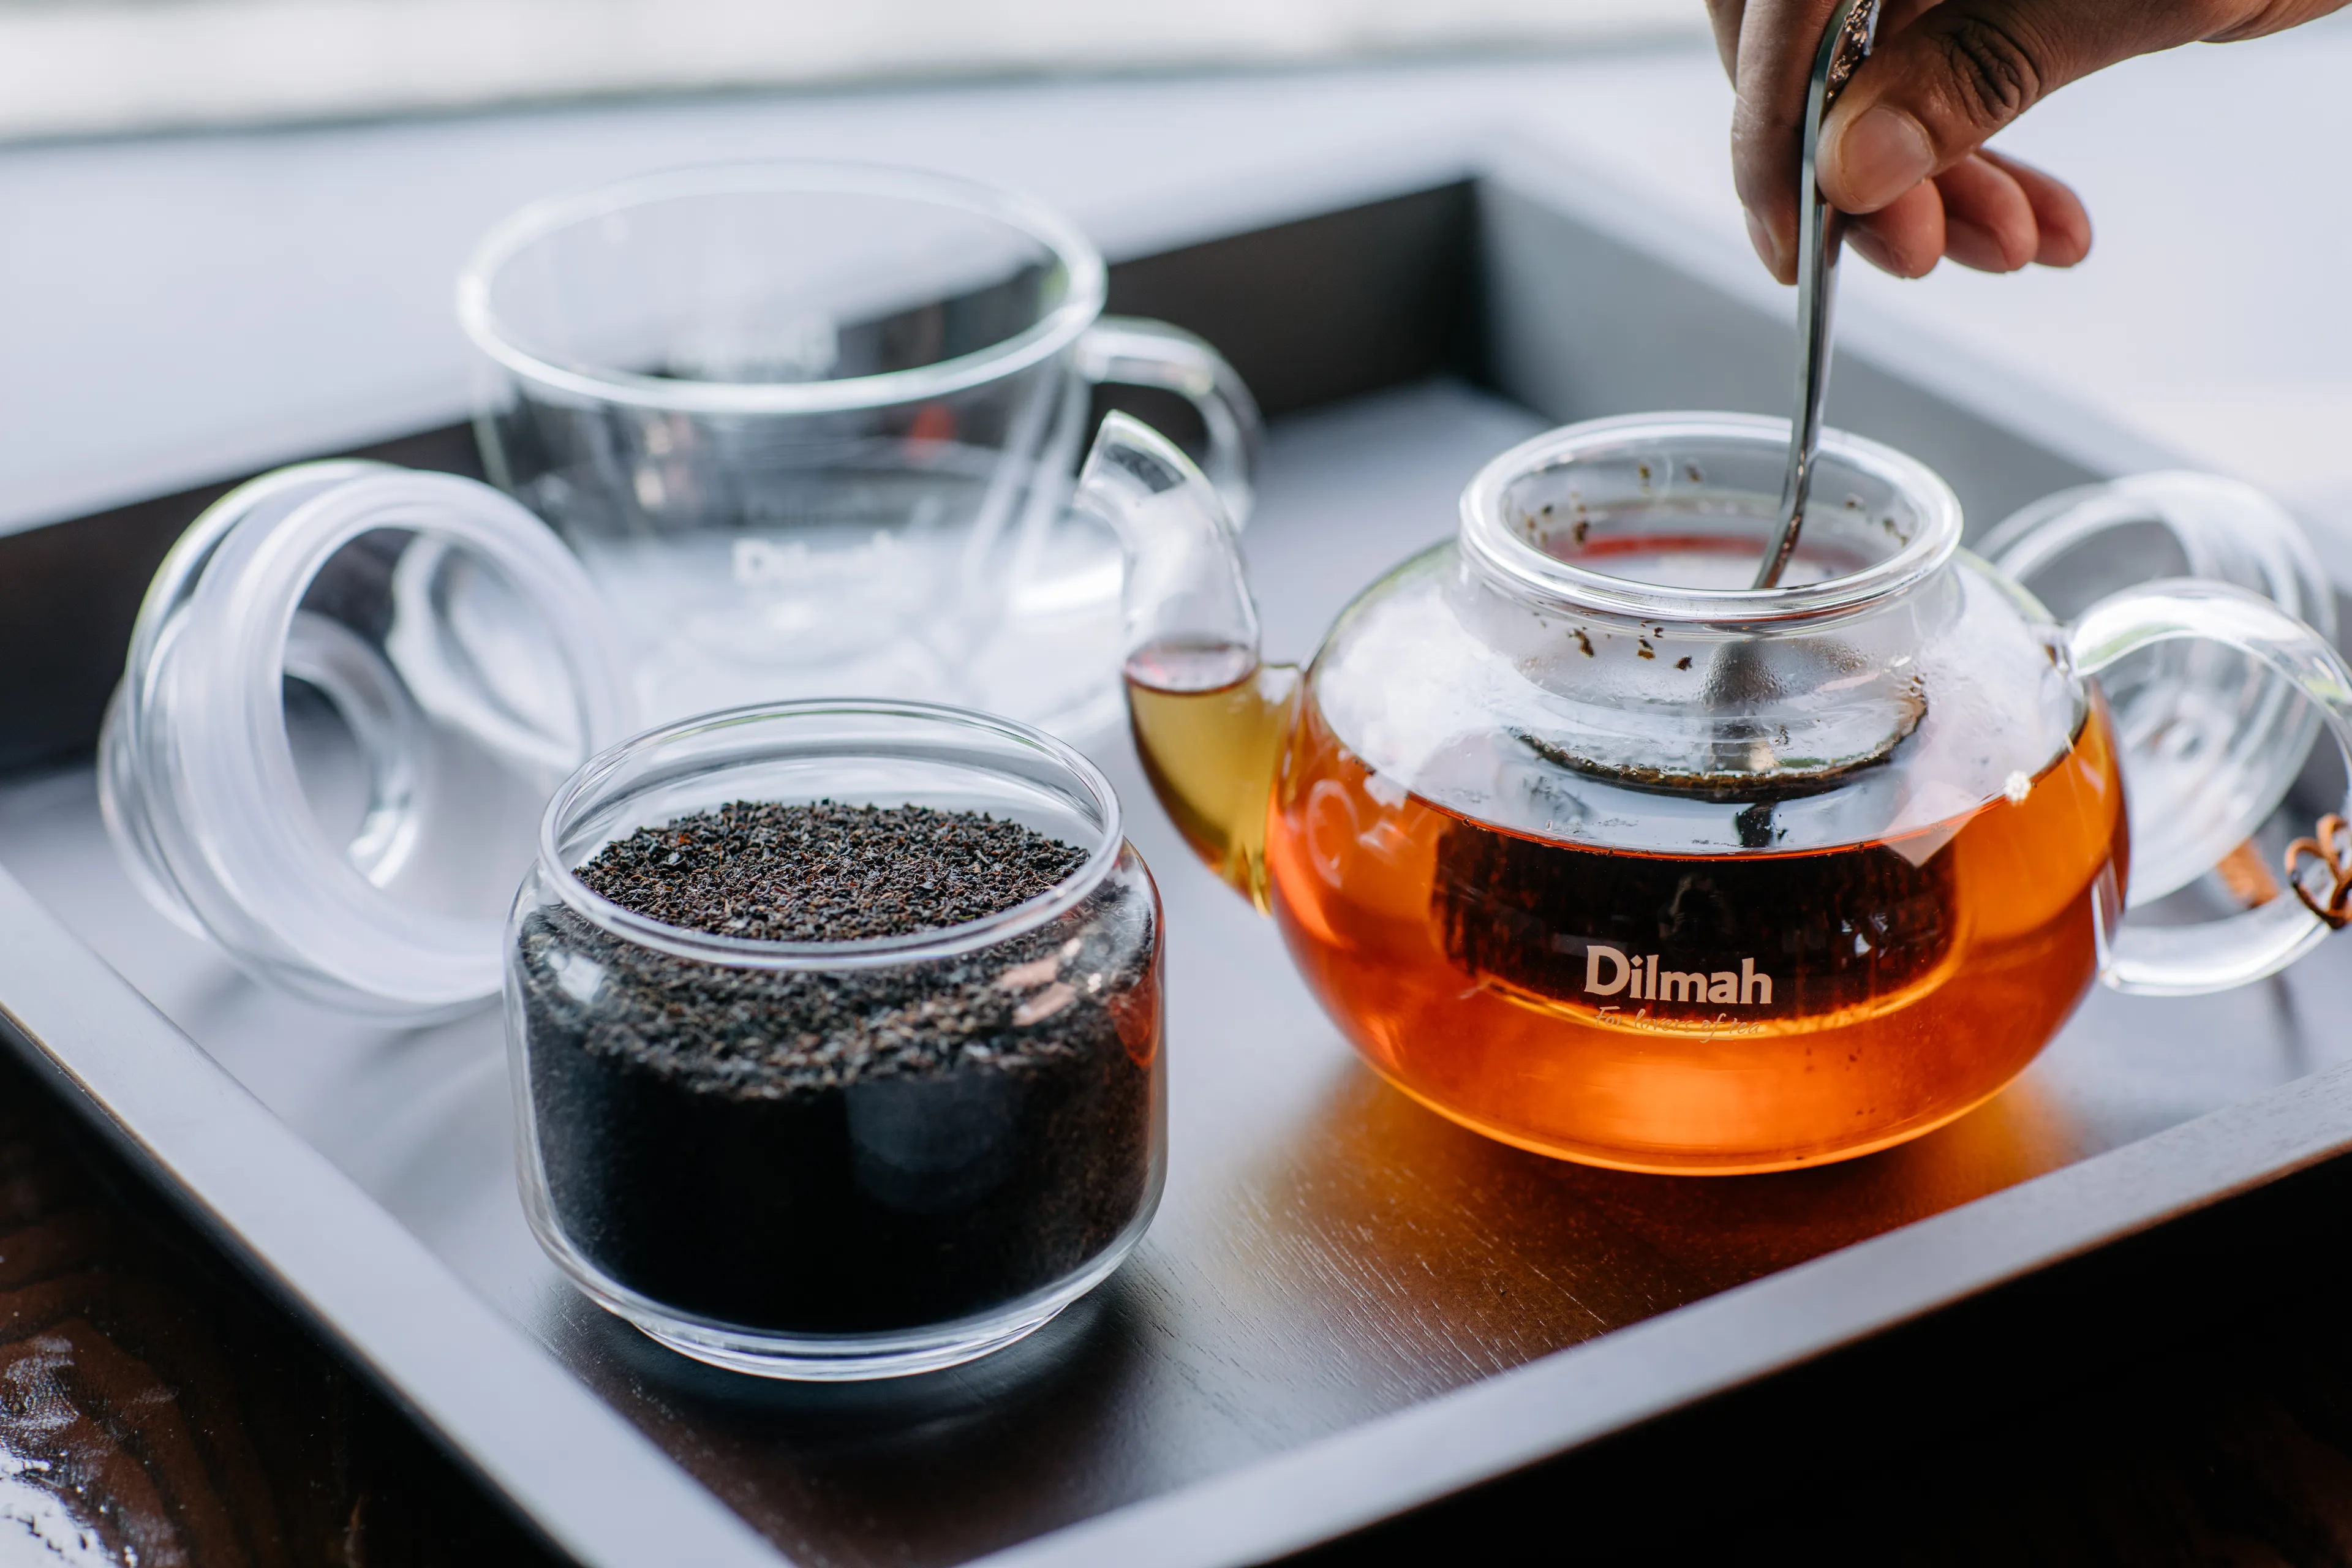 Loose leaf tea jar and a hand stirring the infused tea in a glass tea pot